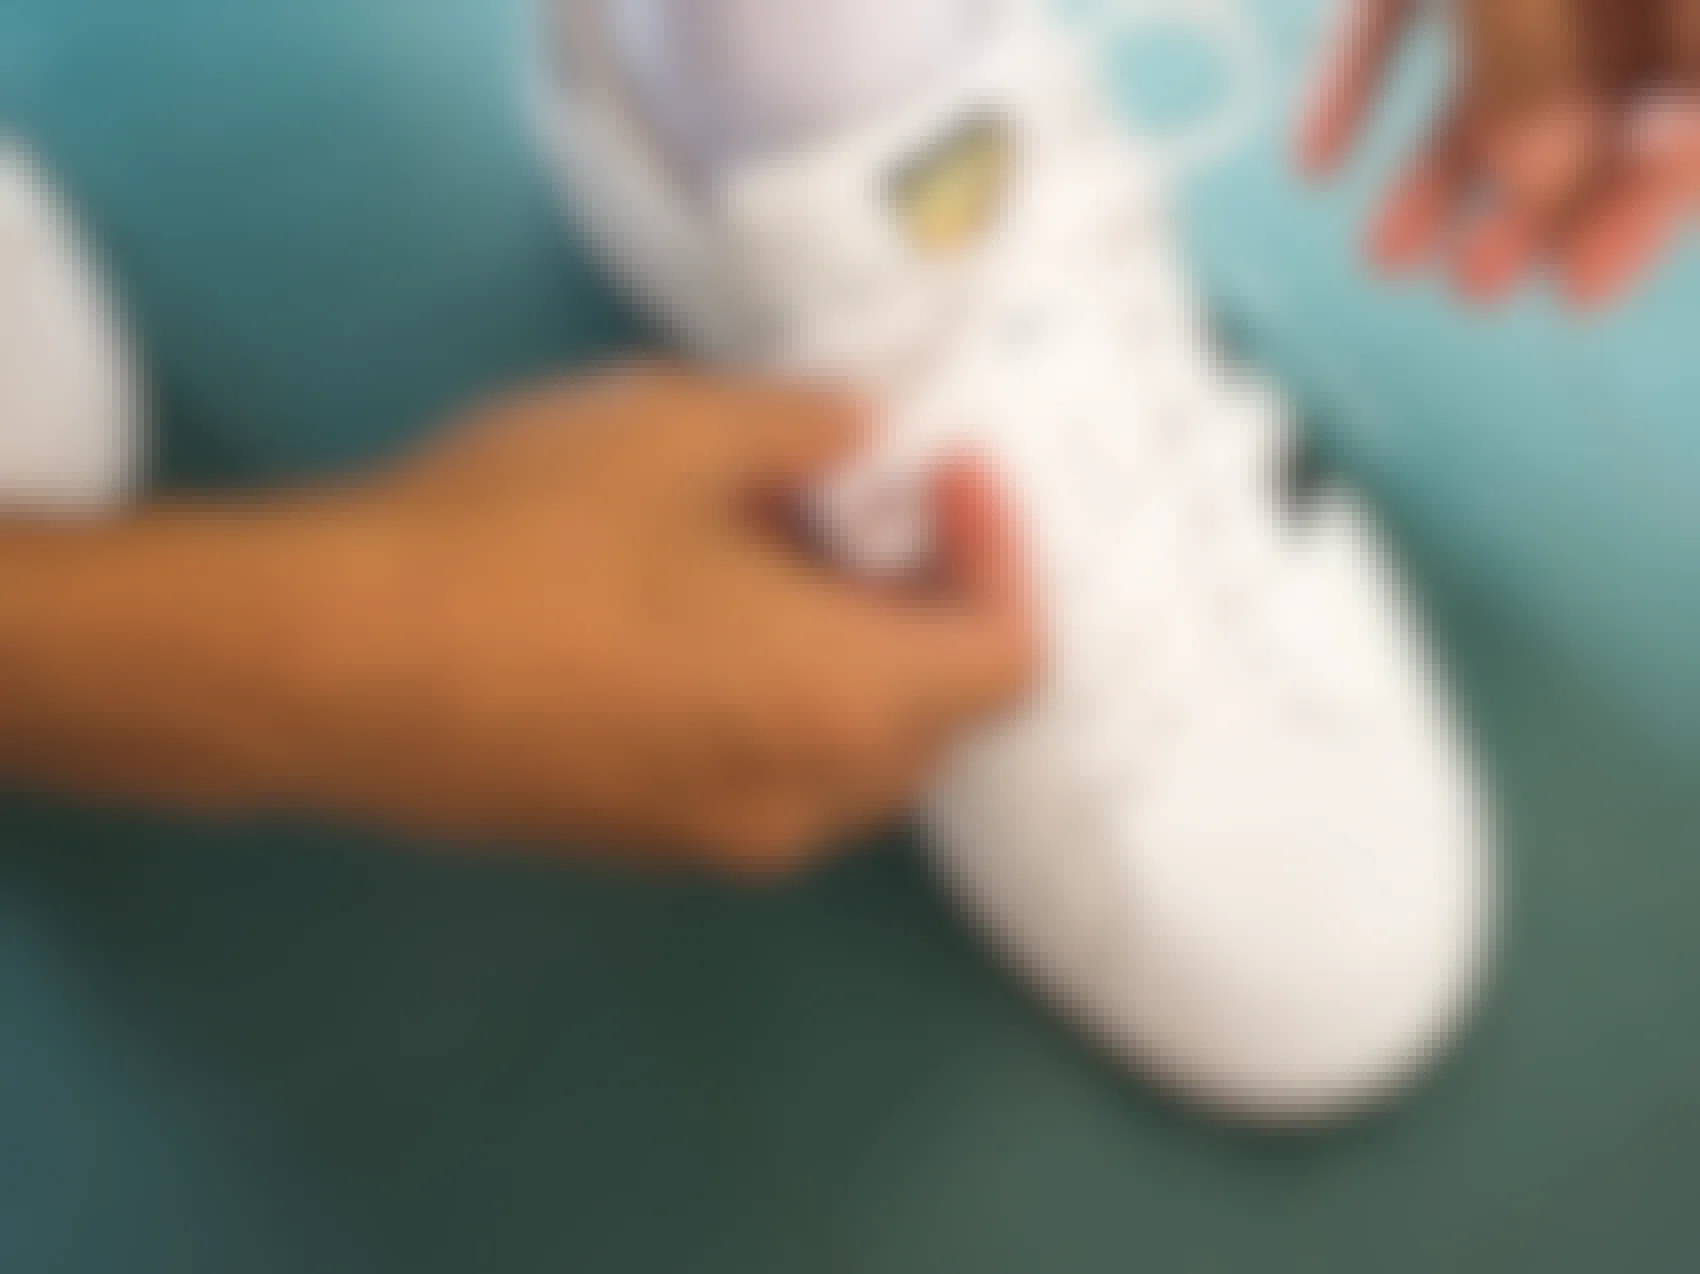 Person tying an adidas shoe